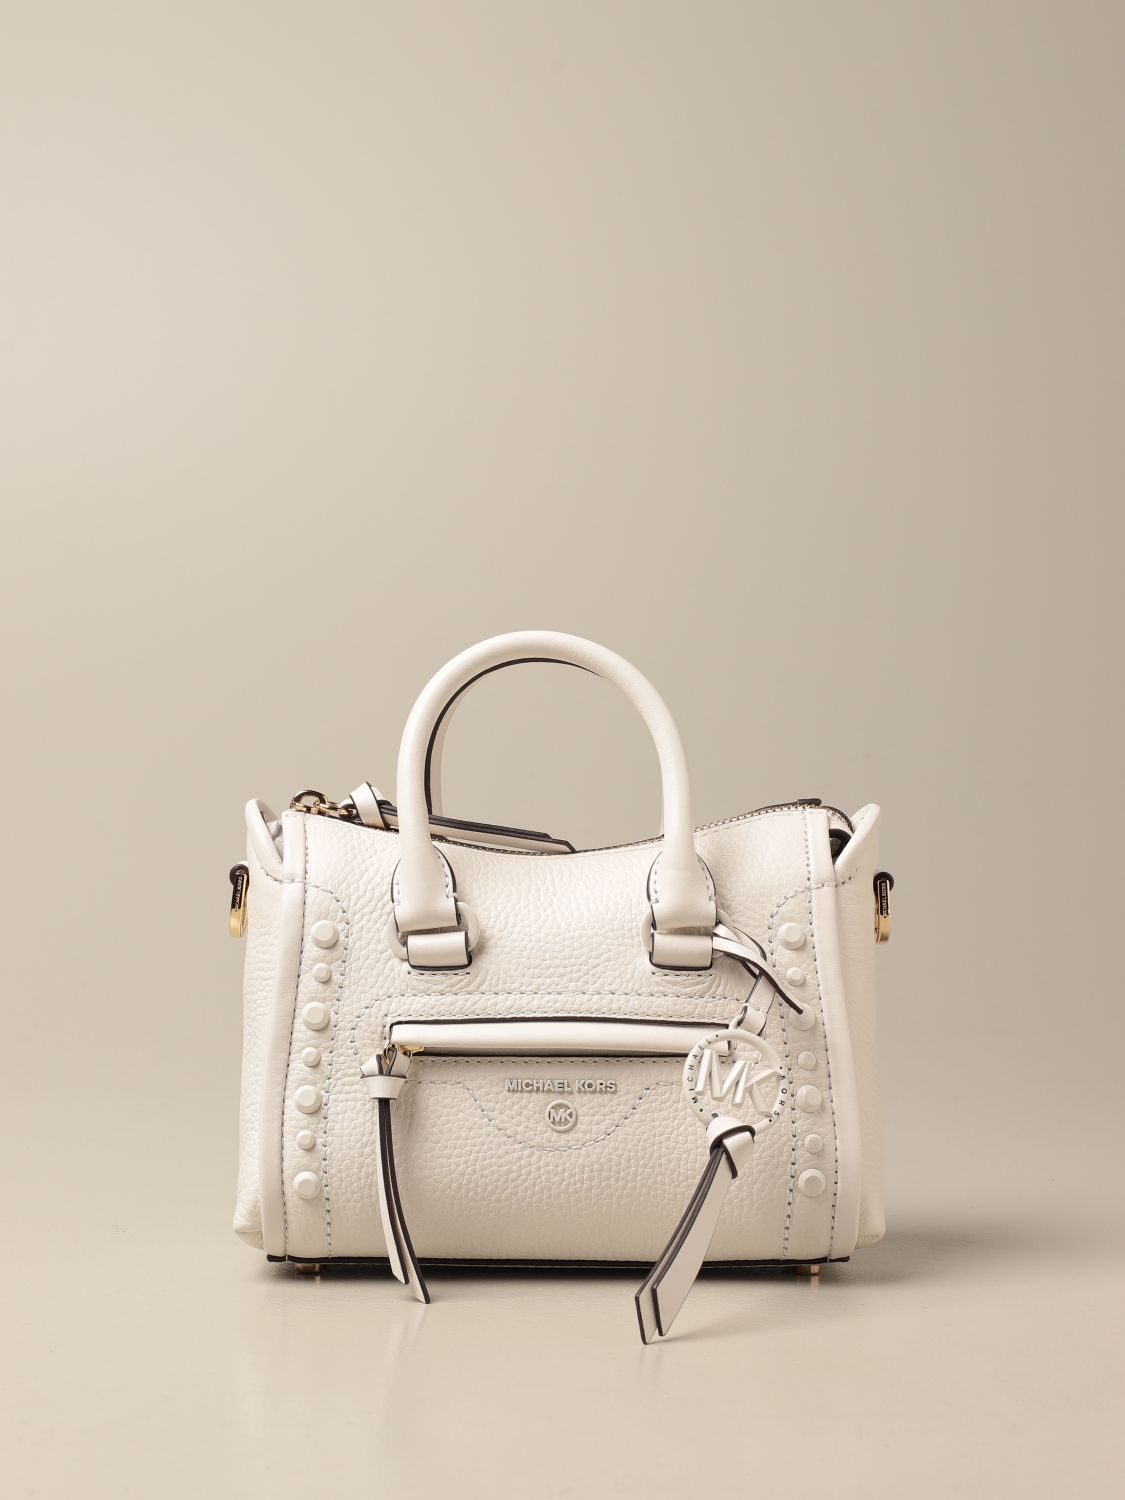 MICHAEL KORS: Carine Michael bag in textured - Michael Kors handbag 32S1GCCC0L online at GIGLIO.COM